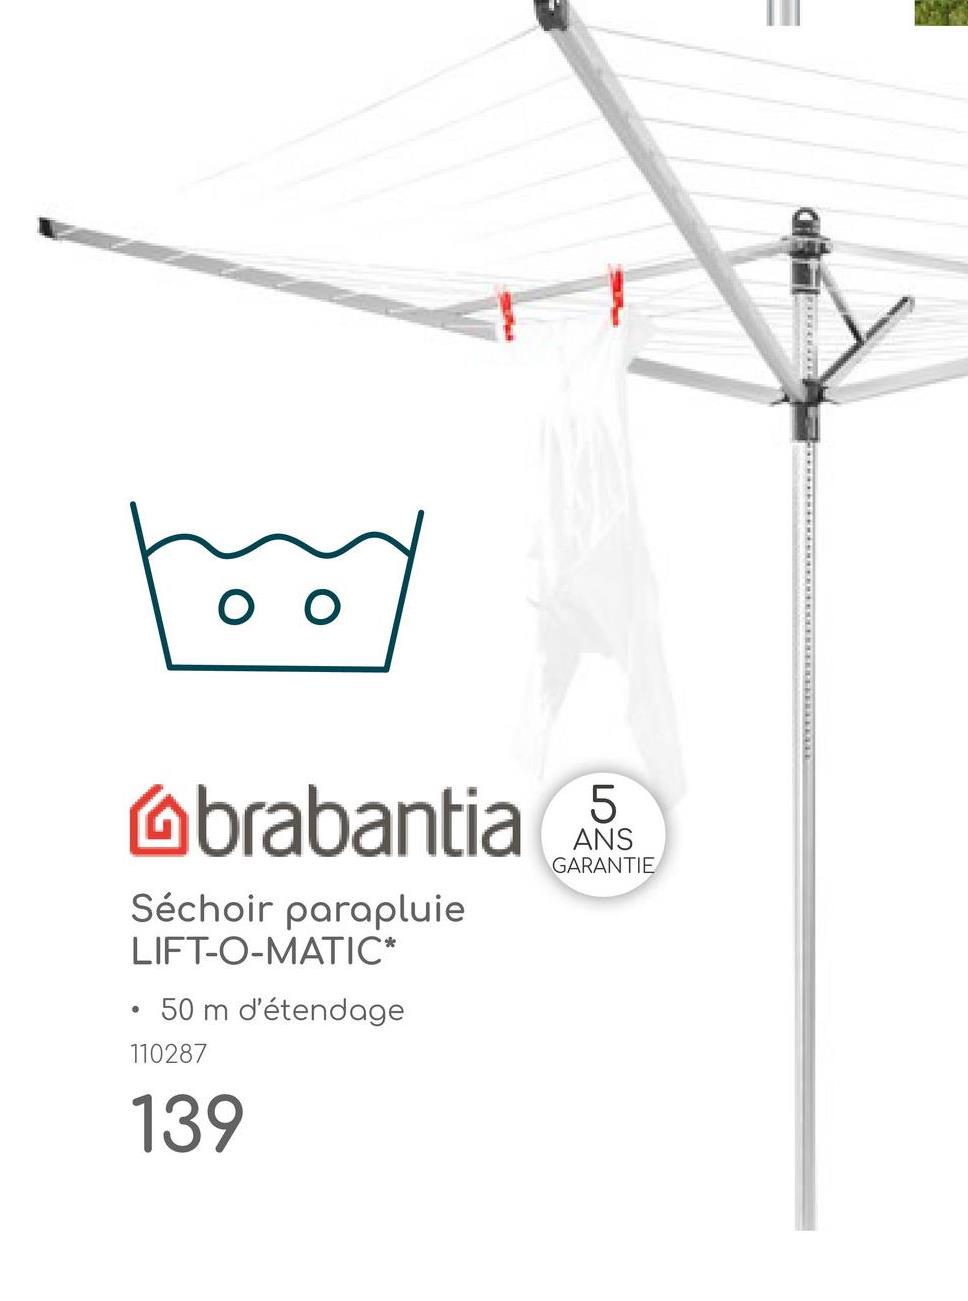 оо
5
brabantia SS
Séchoir parapluie
LIFT-O-MATIC*
• 50 m d'étendage
110287
139
ANS
GARANTIE